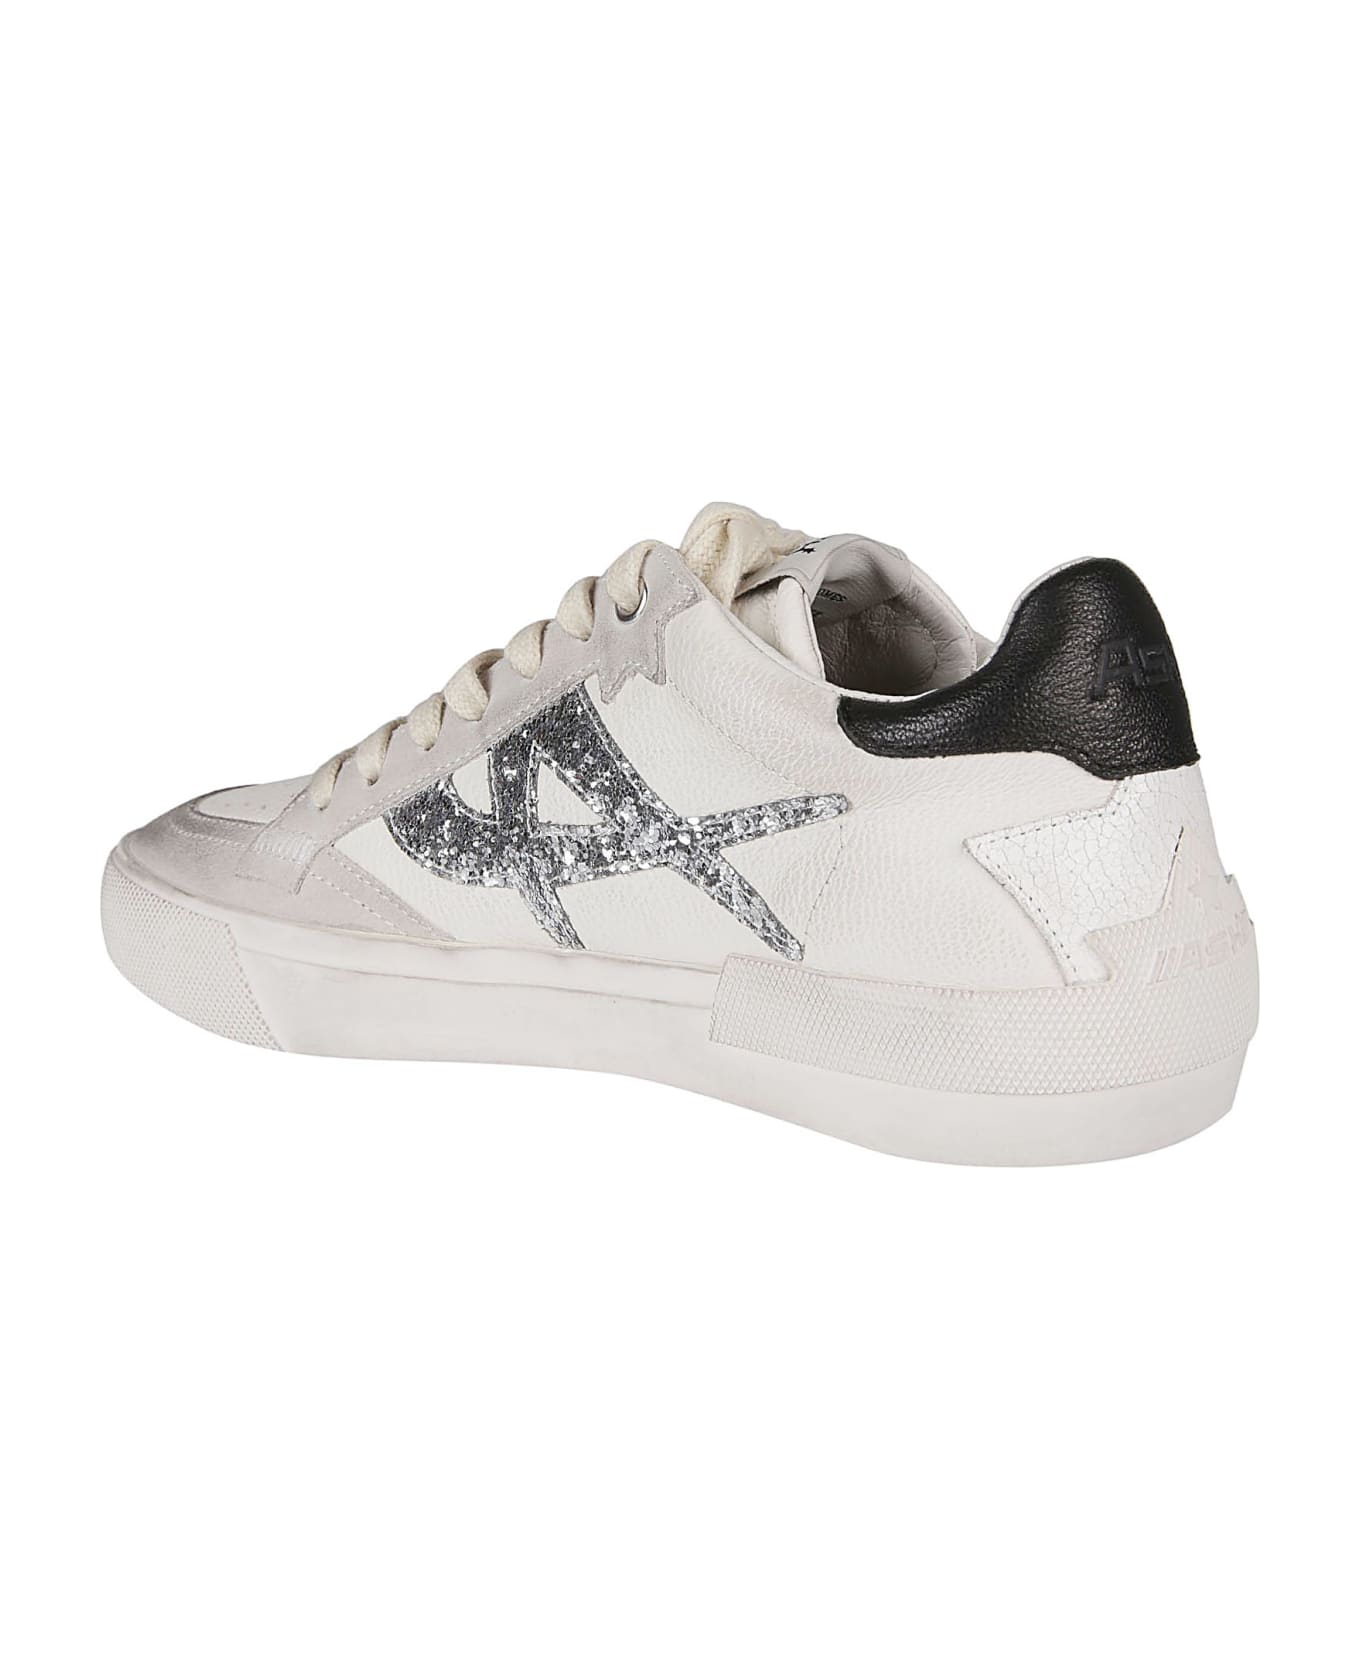 Ash Moonlight Sneakers - White/silver/black